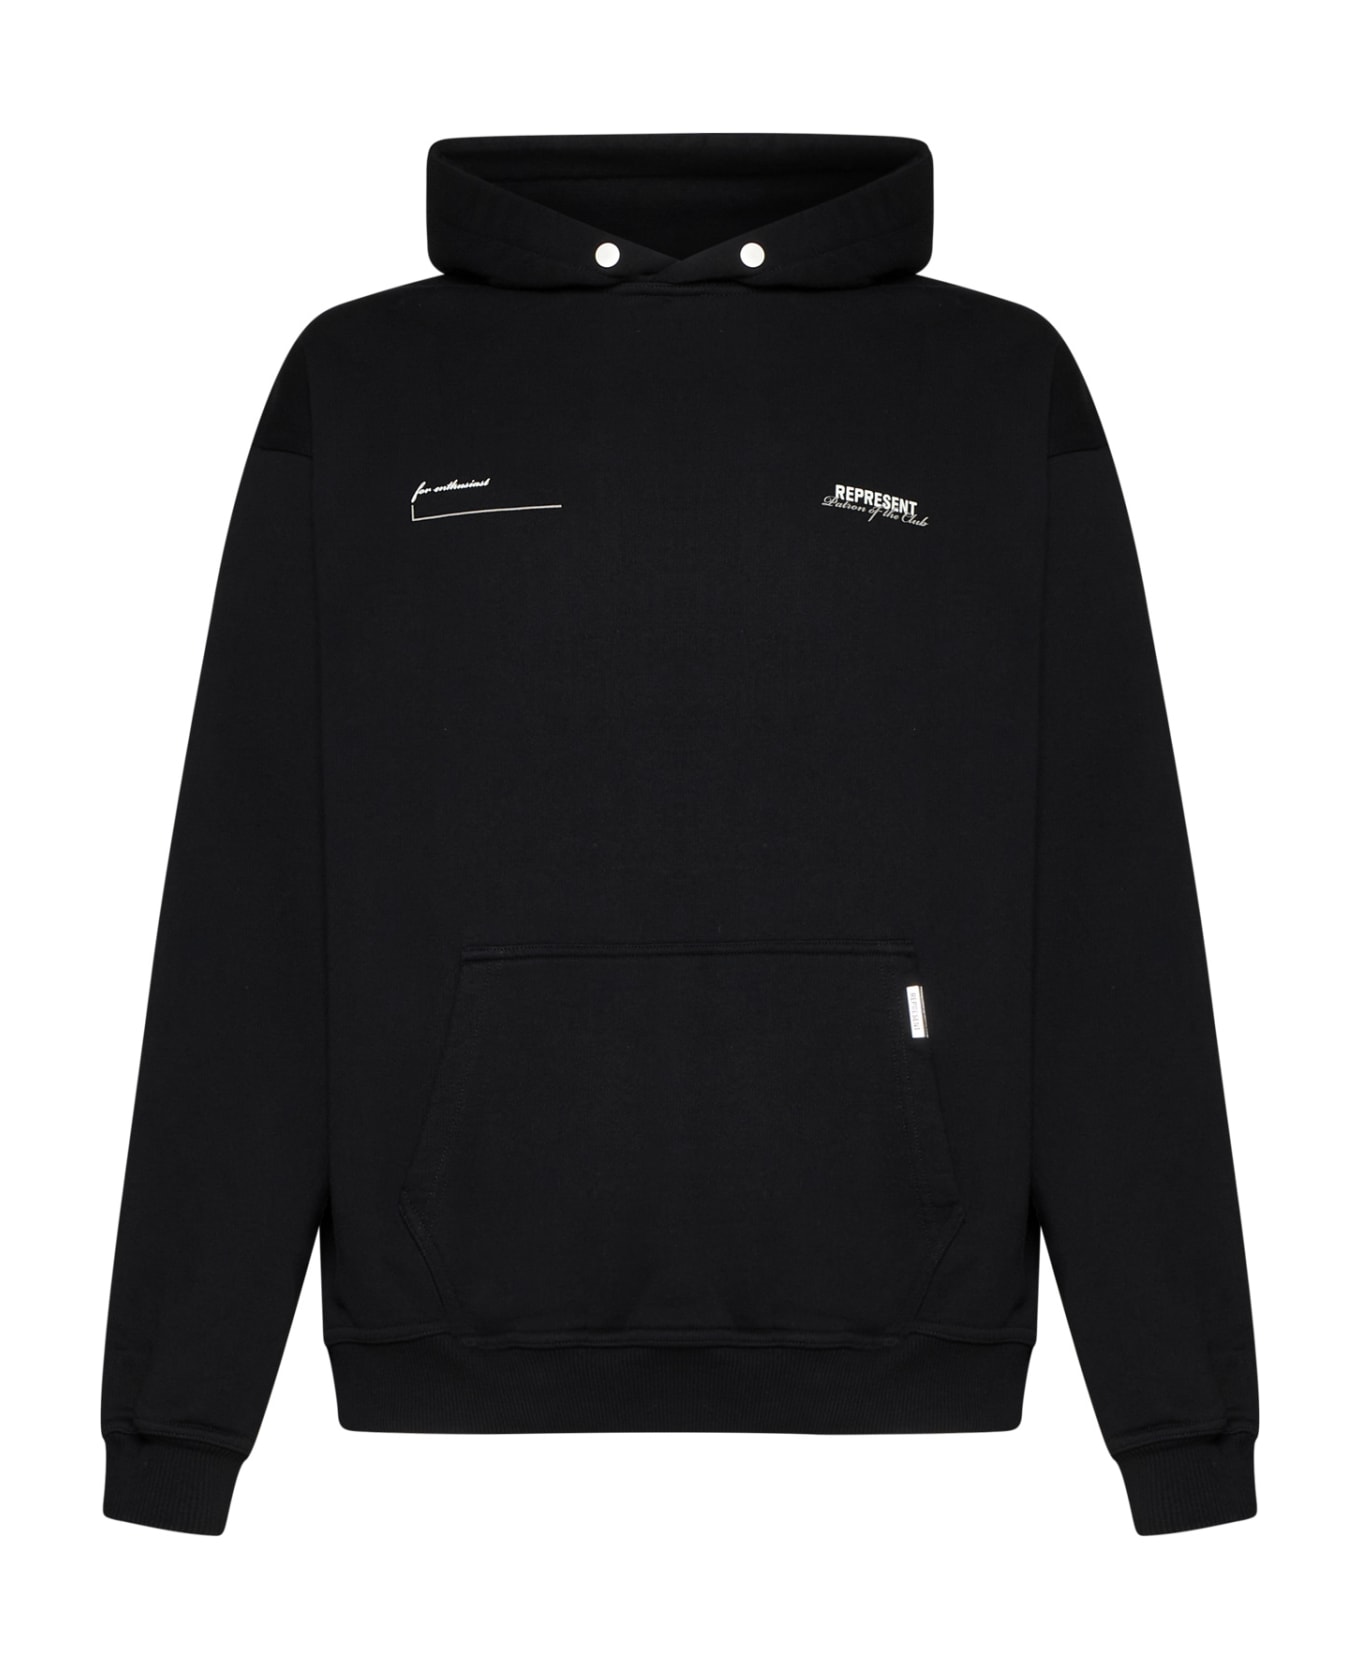 REPRESENT Sweater - Black